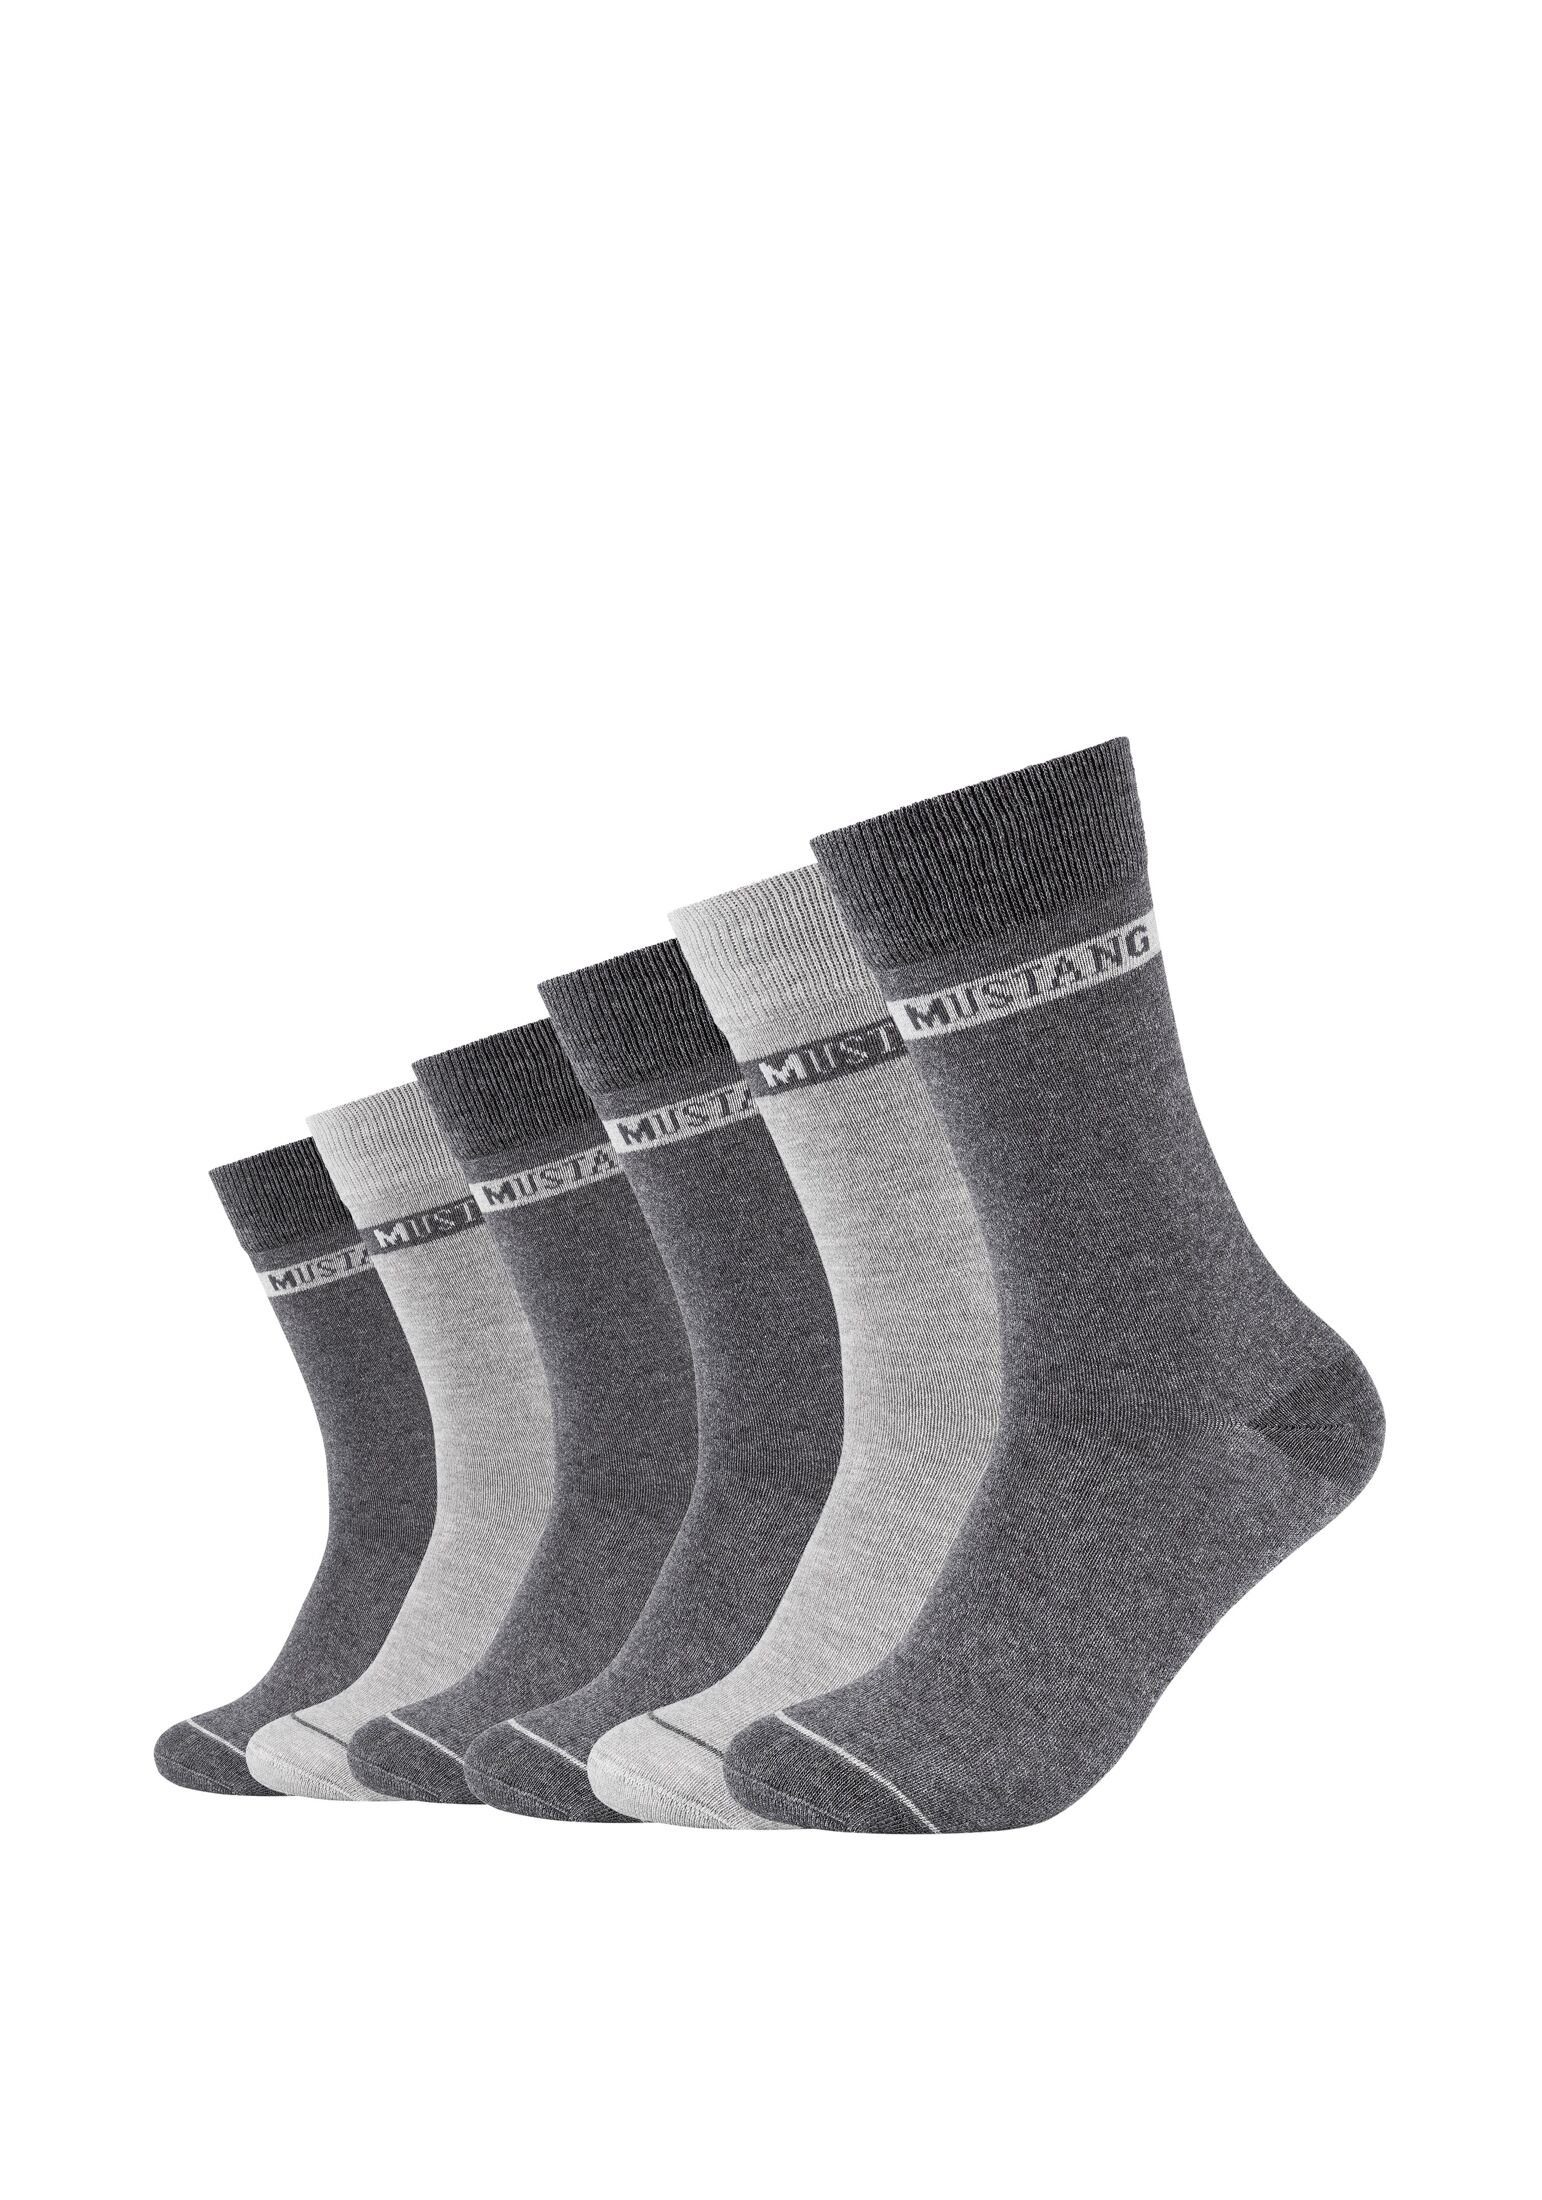 MUSTANG Socken Socken 6er Pack dark grey mix